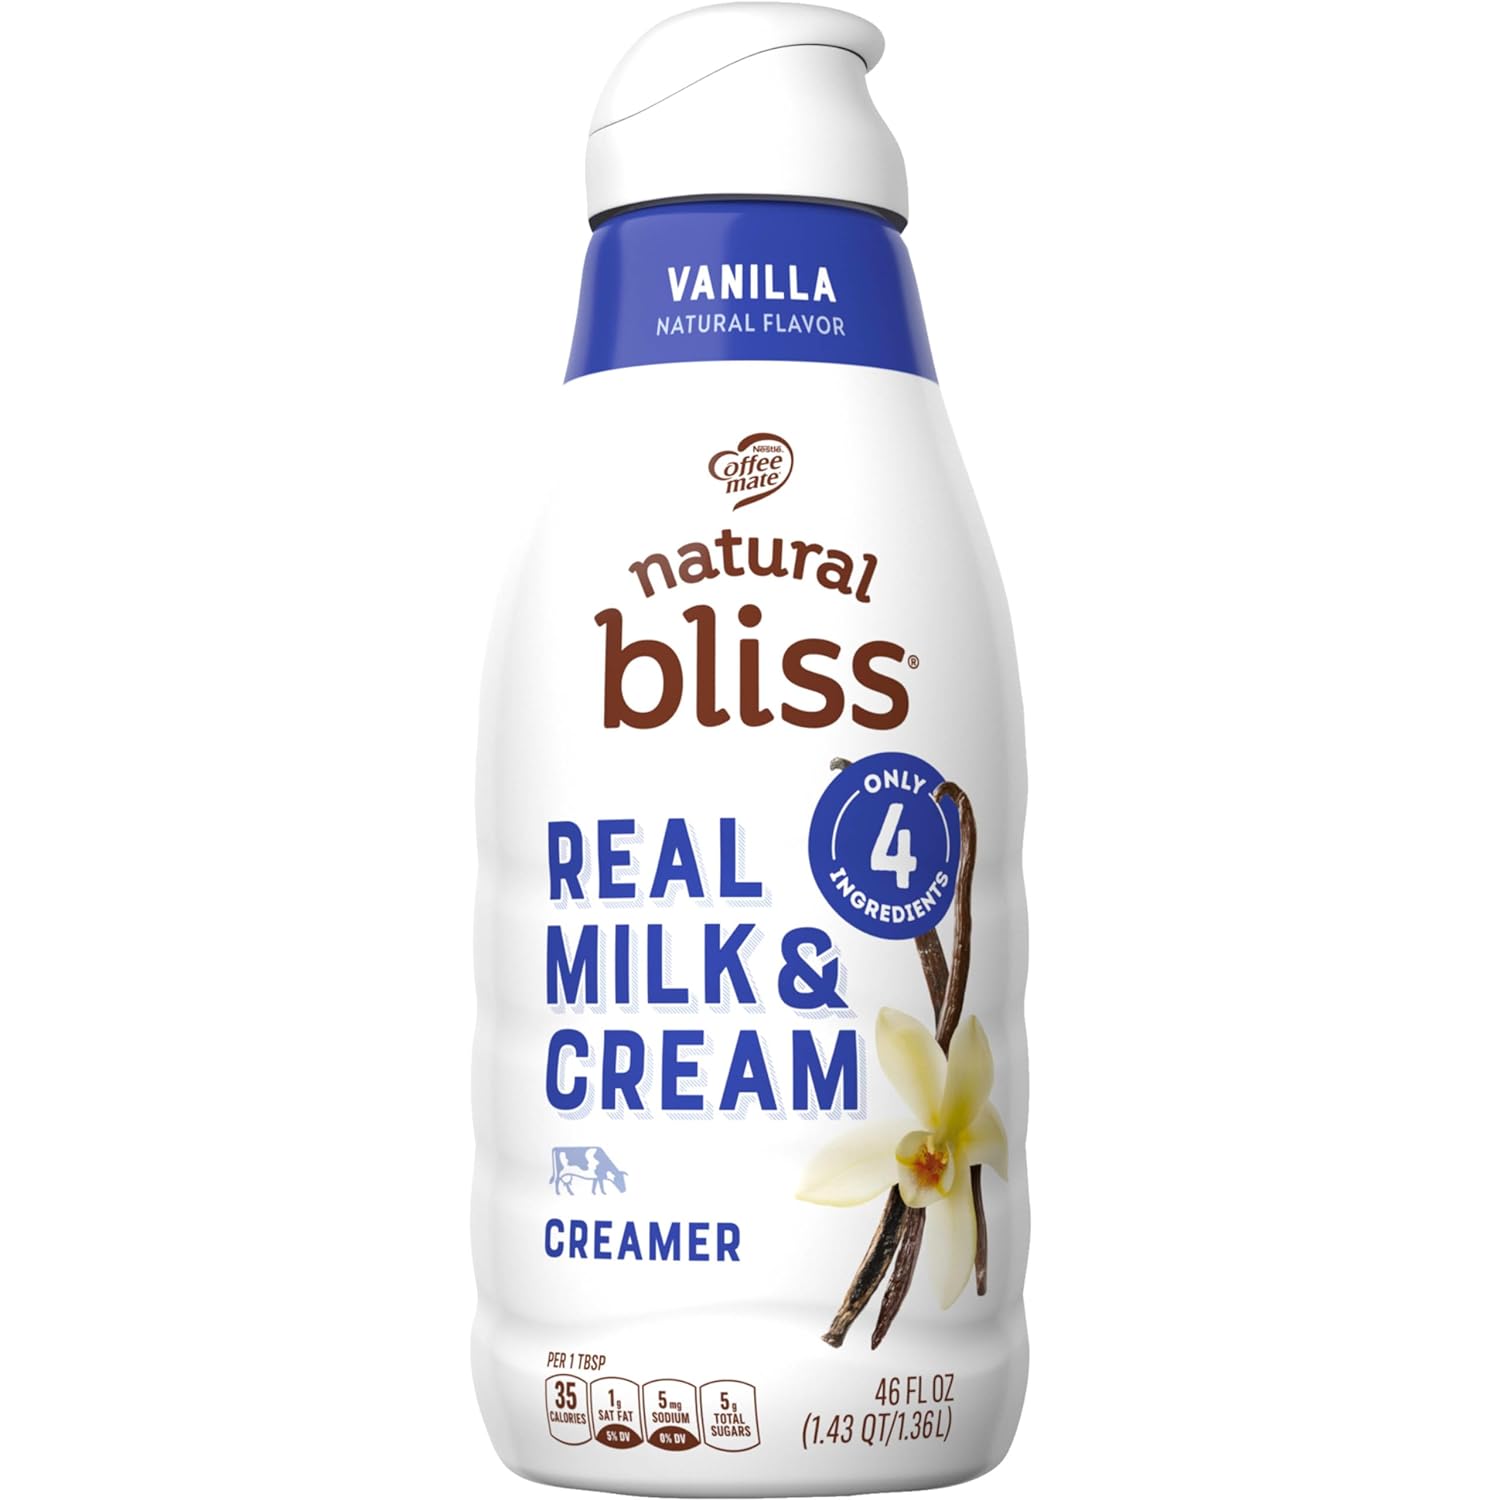 Nestle Natural Bliss Vanilla Flavored Liquid Coffee Creamer, Real Milk Cream Coffee Creamer for a Rich, Tasty Coffee Flavor, Real Dairy Creamer Liquid About 63 Servings (1 tbsp per serving) (32 fl oz)